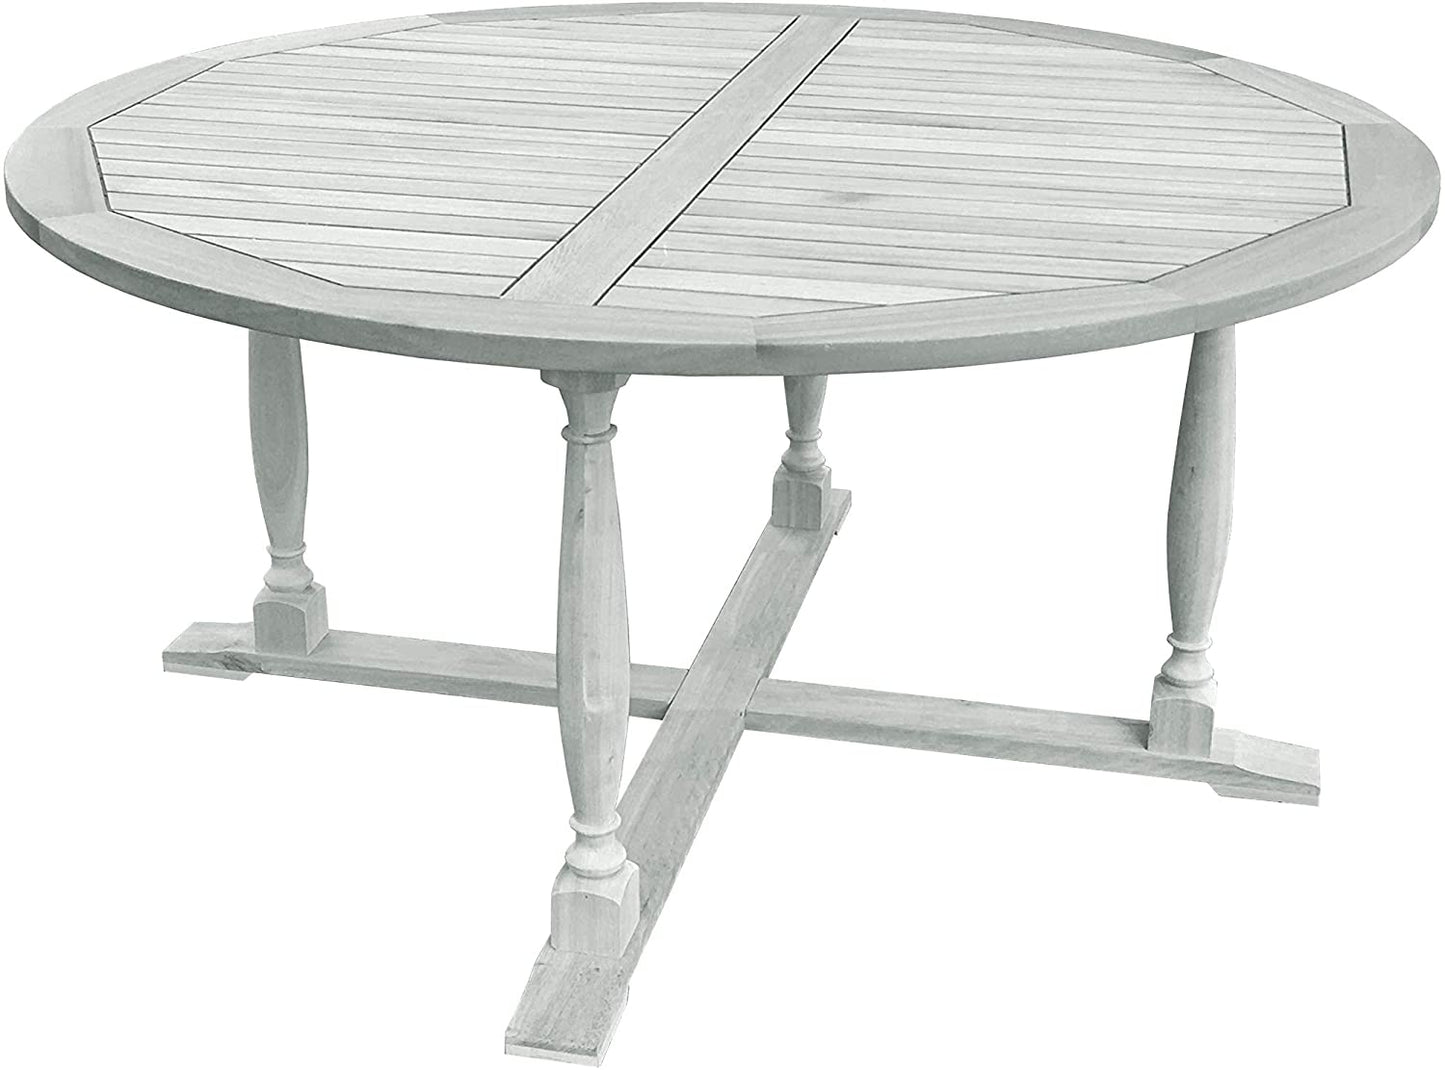 Acacia Round Dining Table - Light Gray